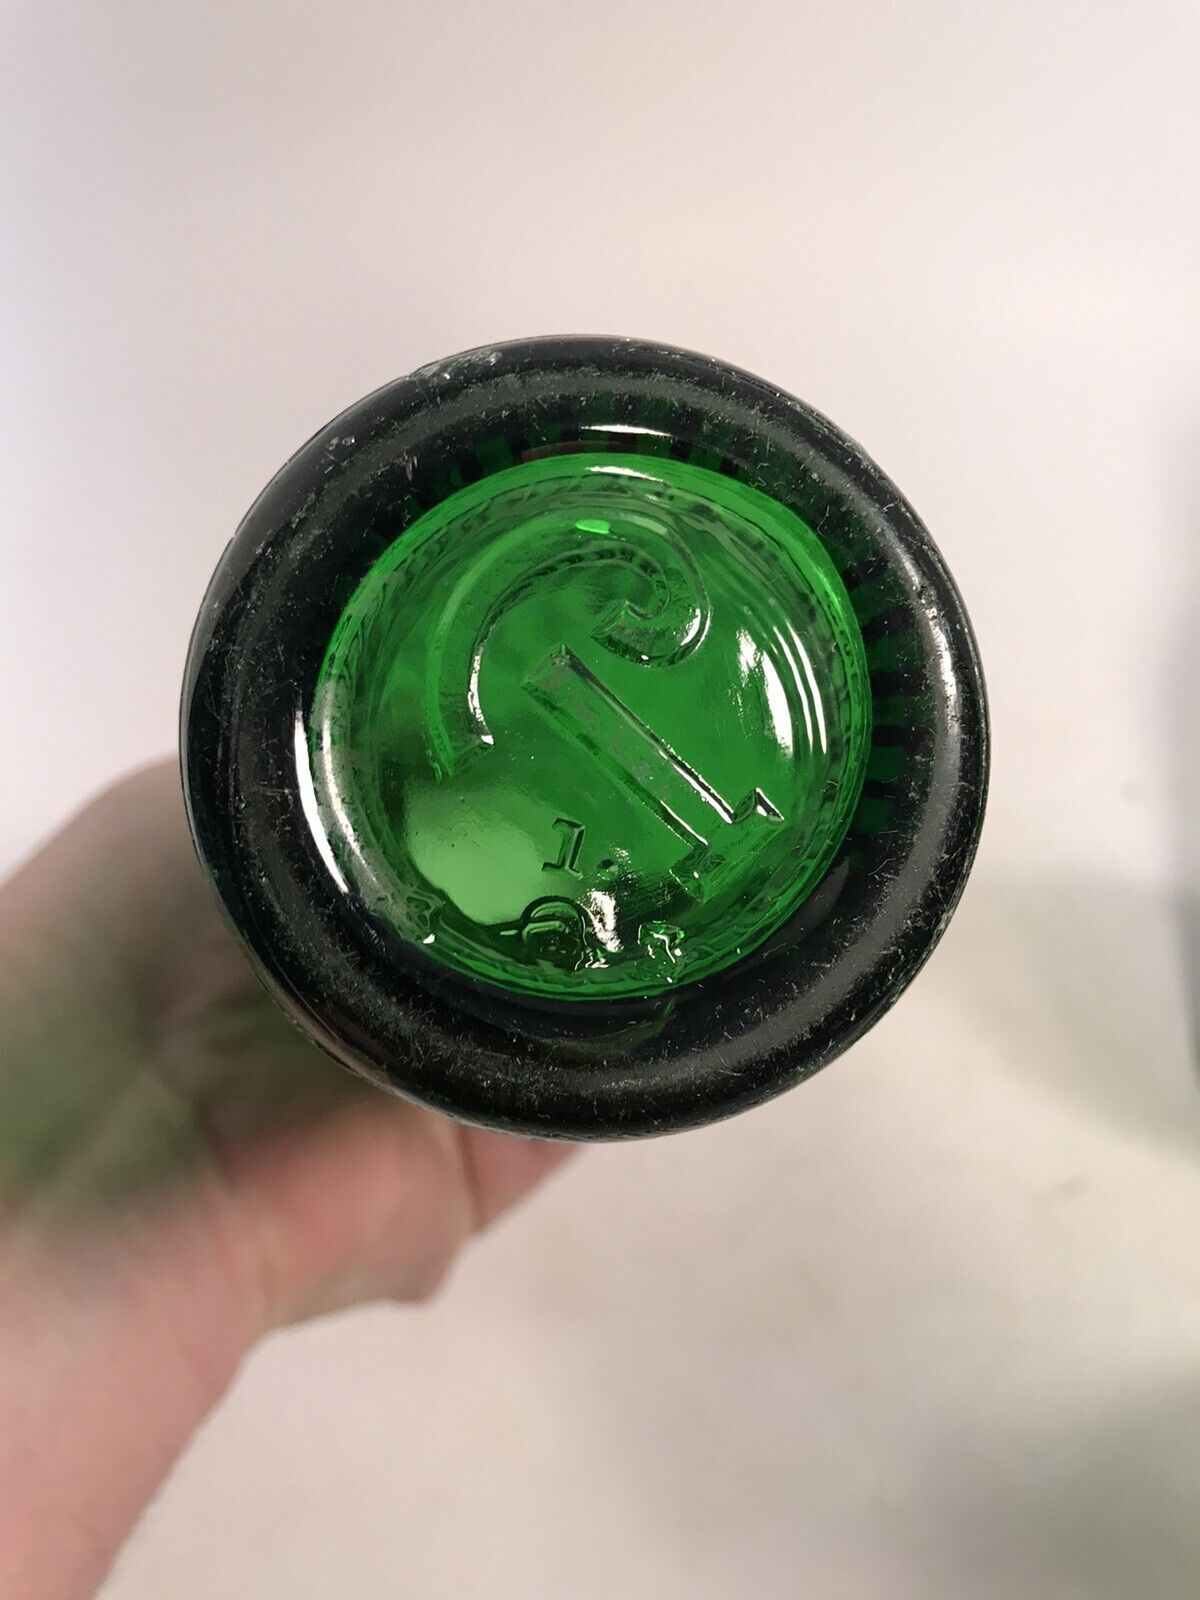 SCHILLE green Soda Bottles, Pop, Beverage, lot of 3 the same, dug, 7 ounce Без бренда - фотография #7